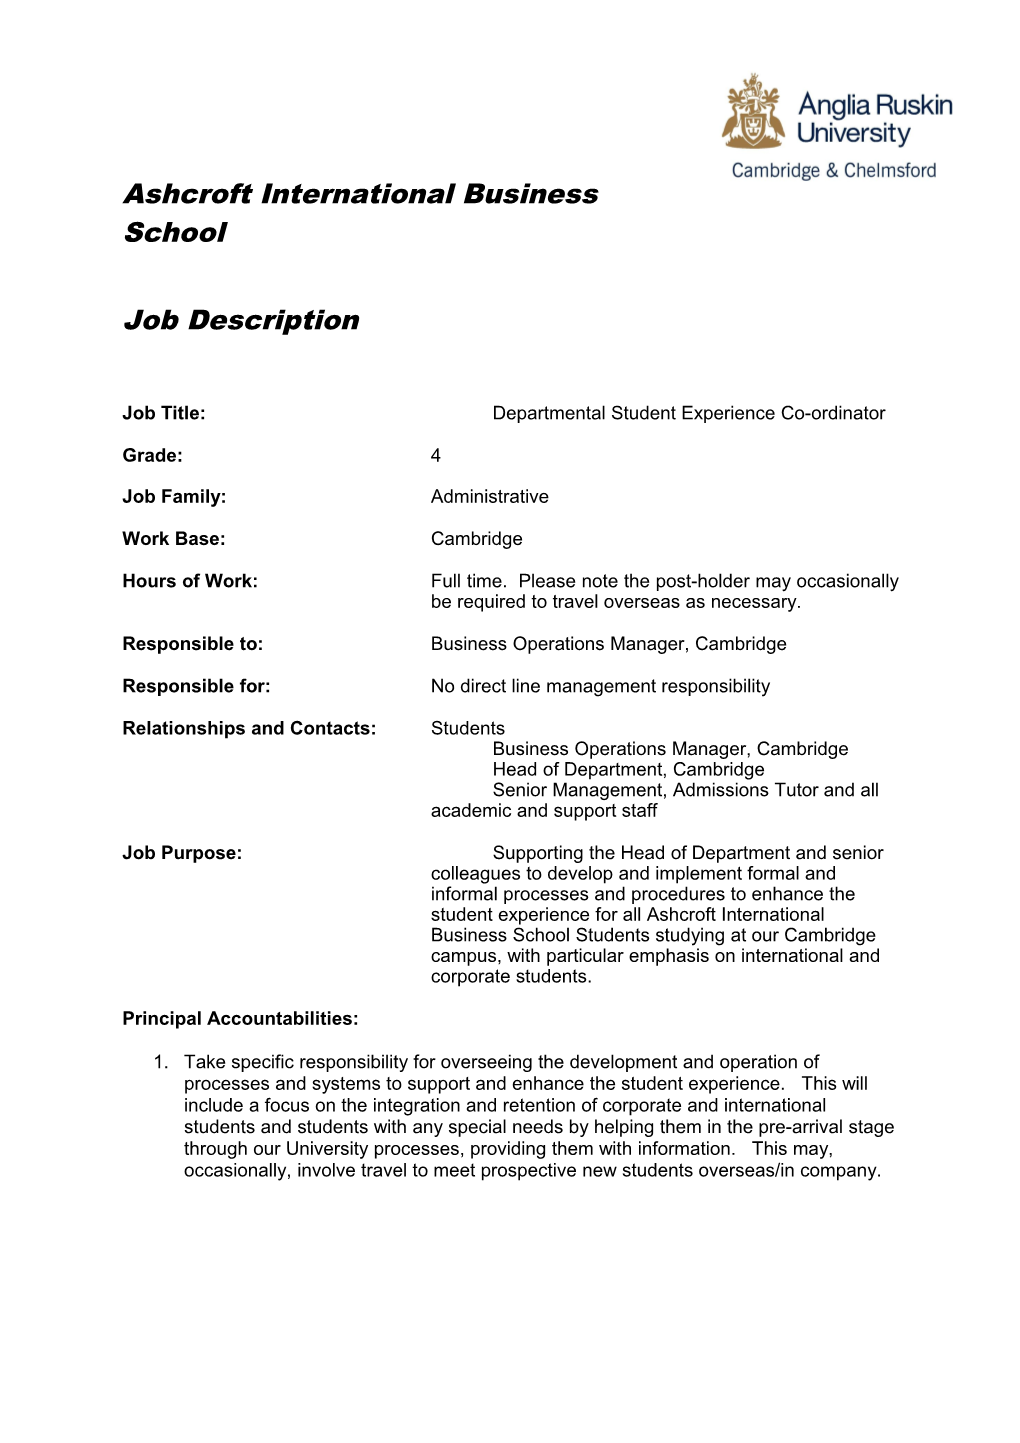 Format for Job Description